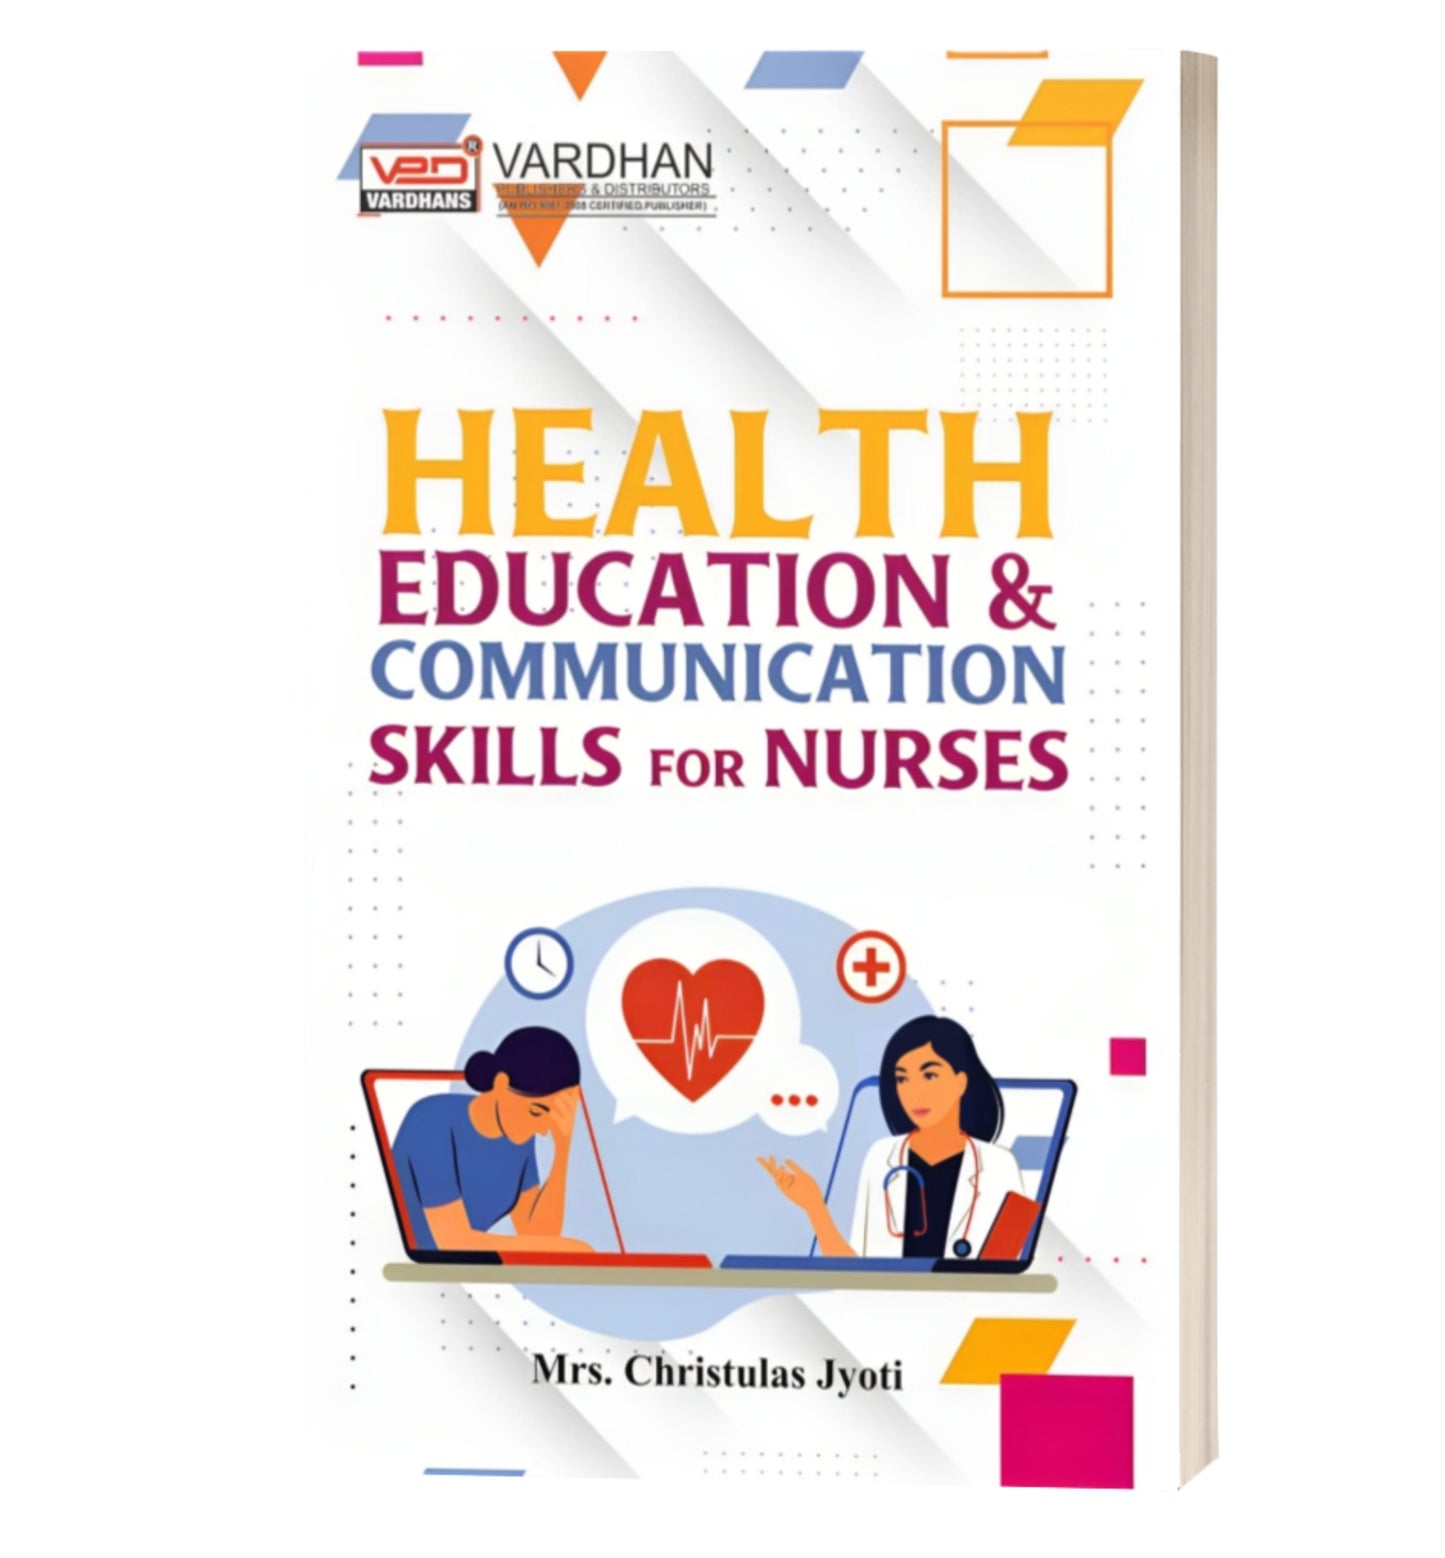 Health Education & Communication Skills for Nurses